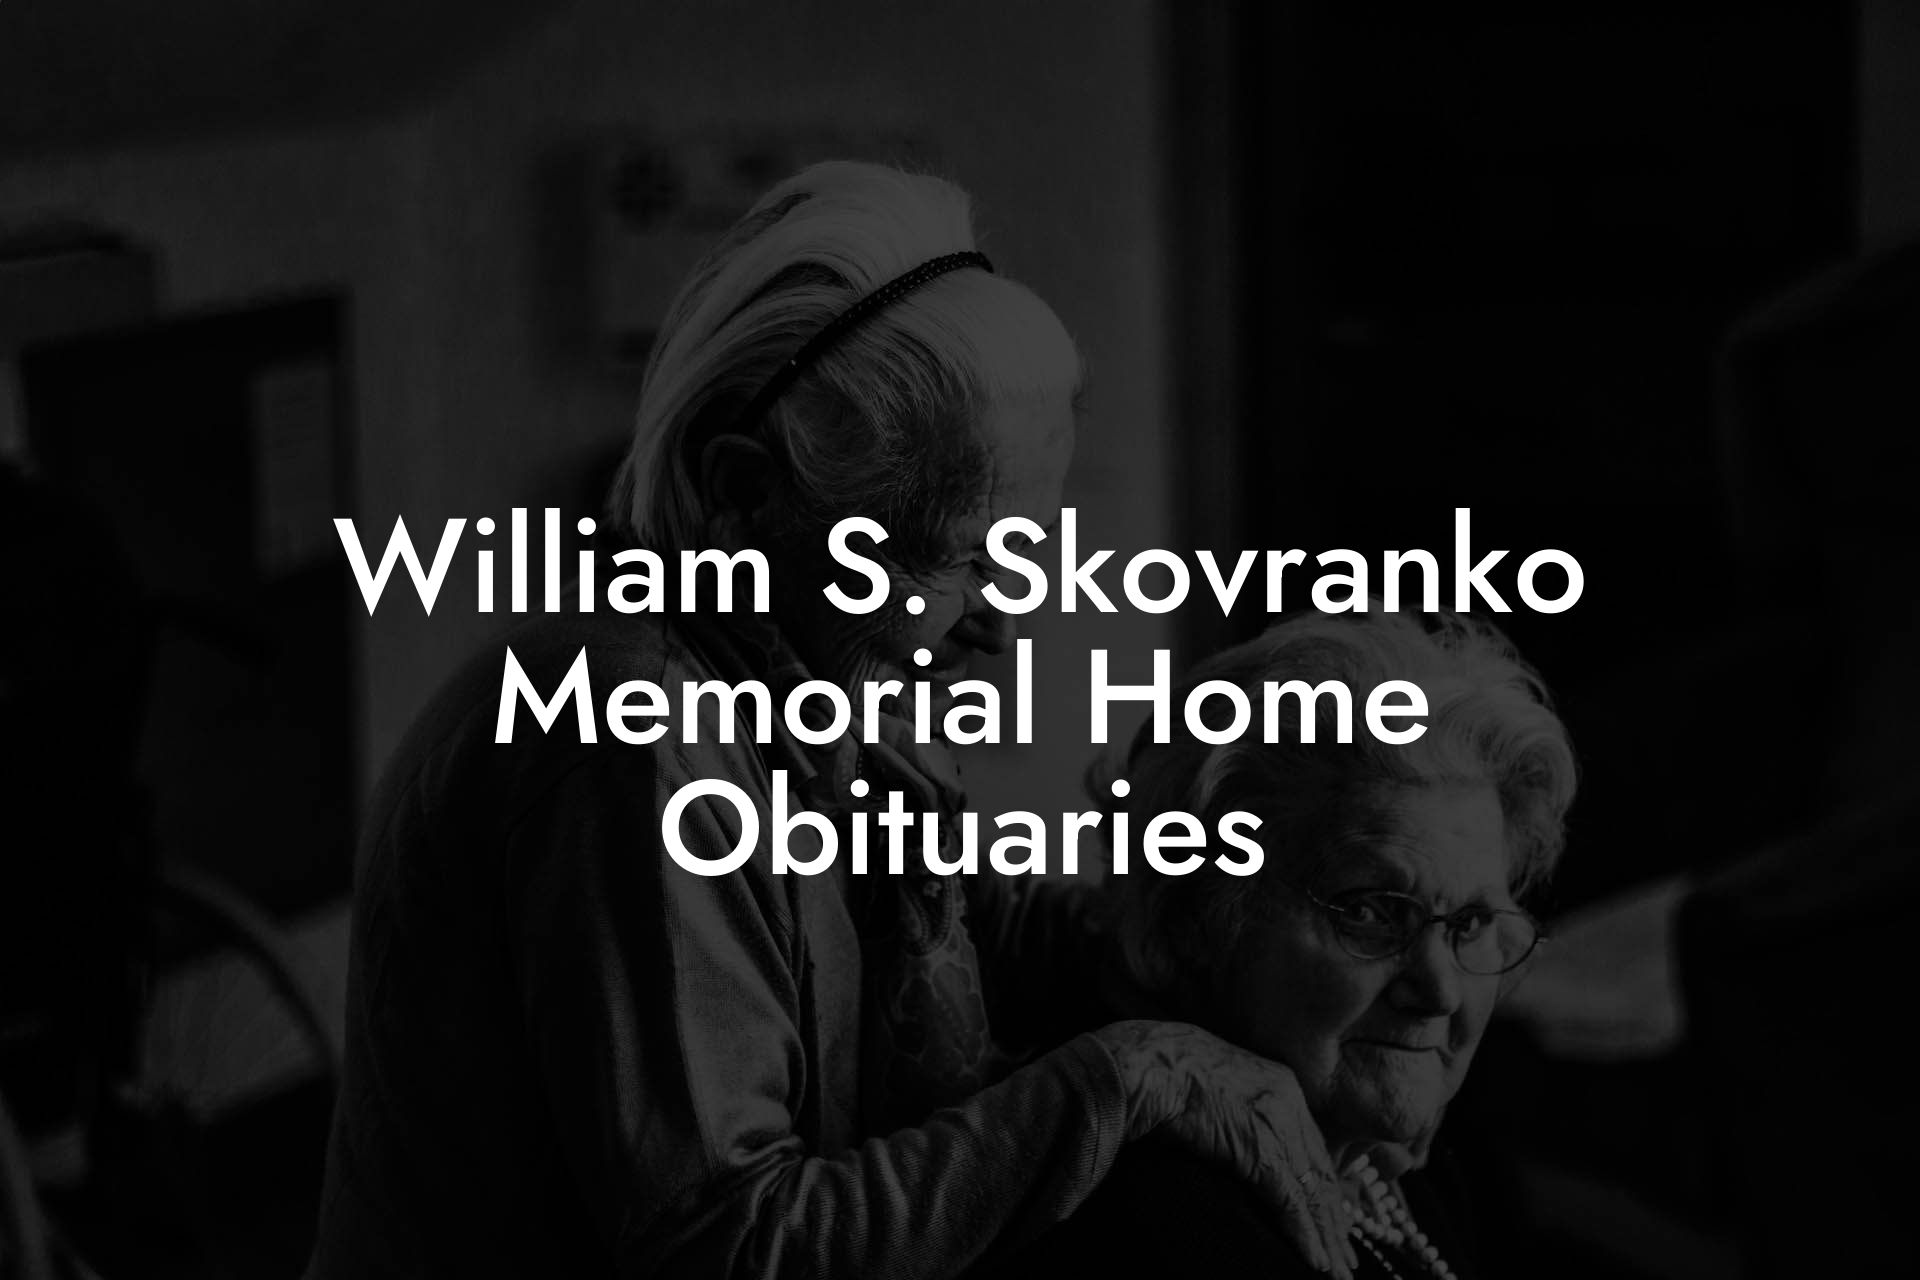 William S. Skovranko Memorial Home Obituaries